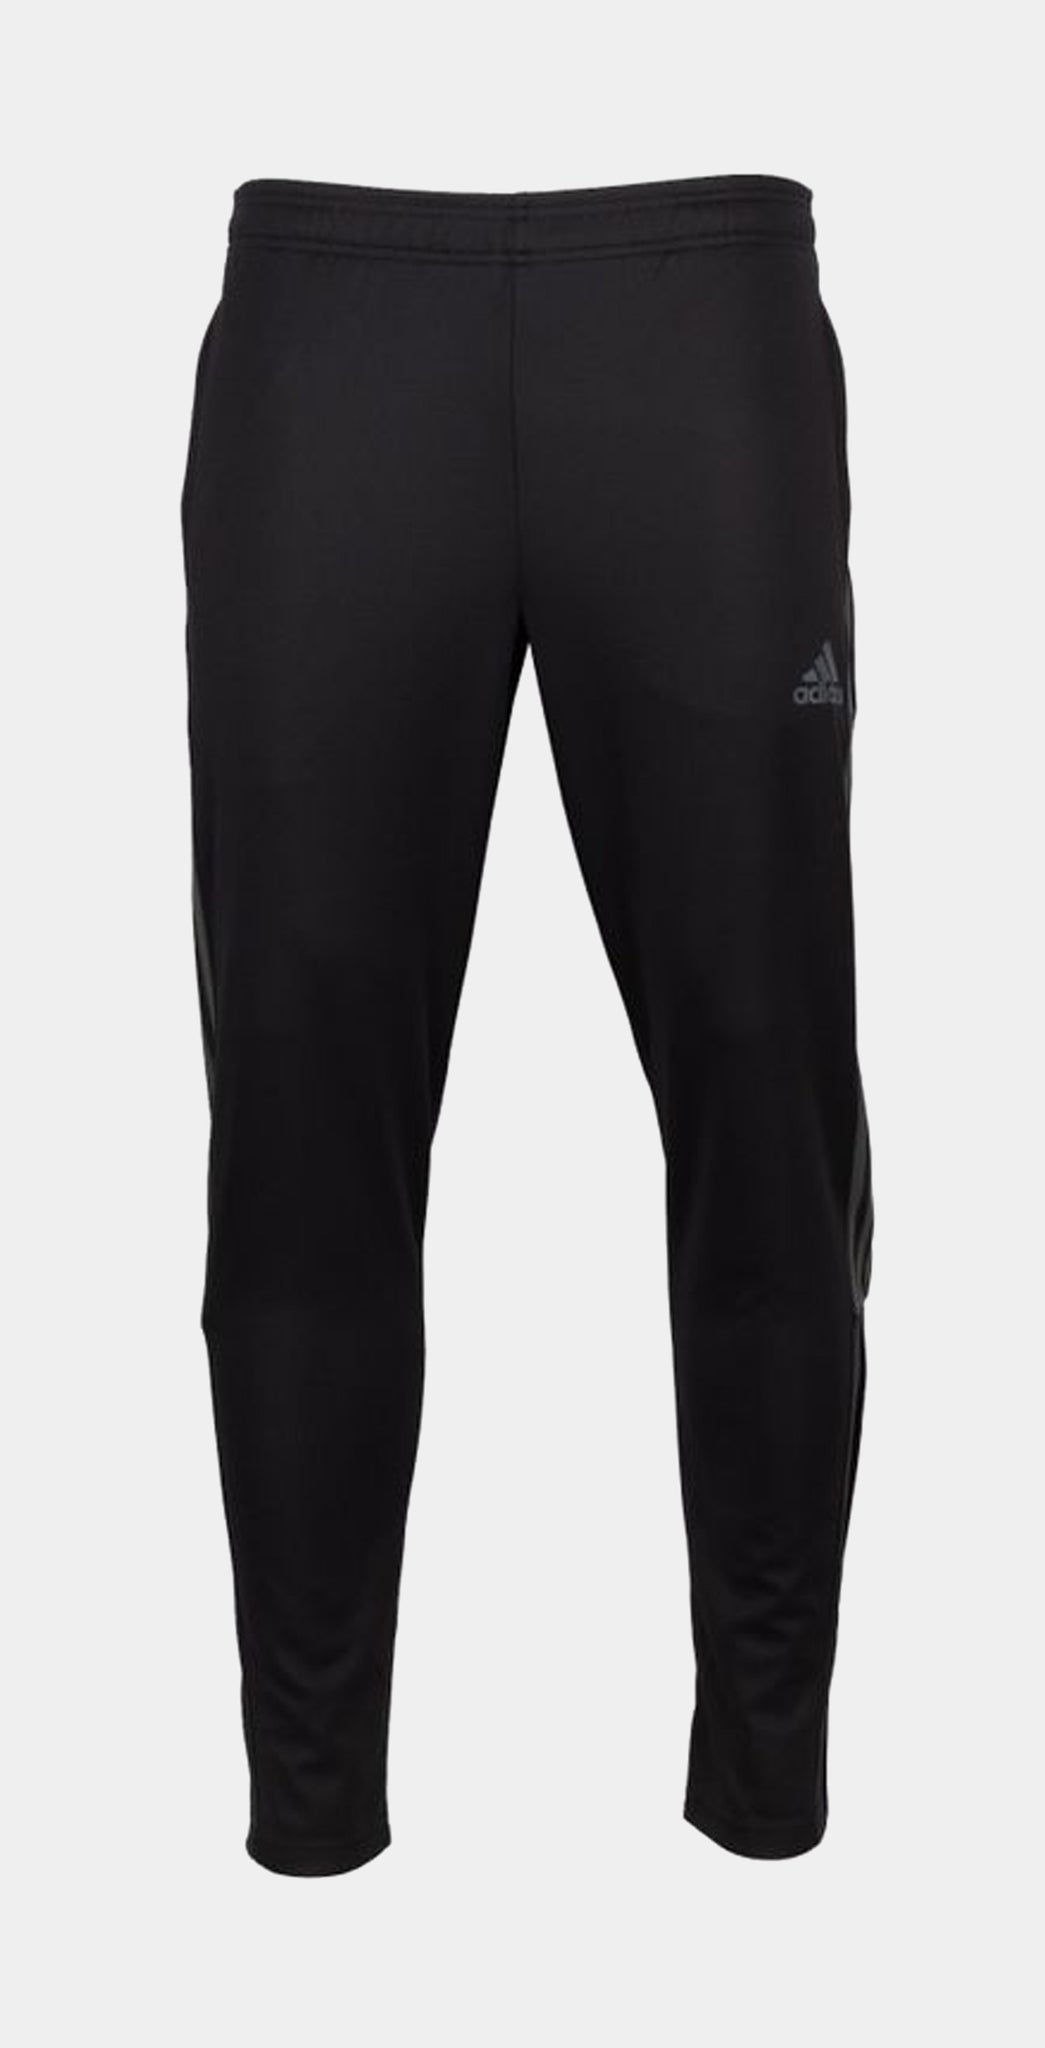  Adidas Womens Tiro 21 Track Pants Black/White Large